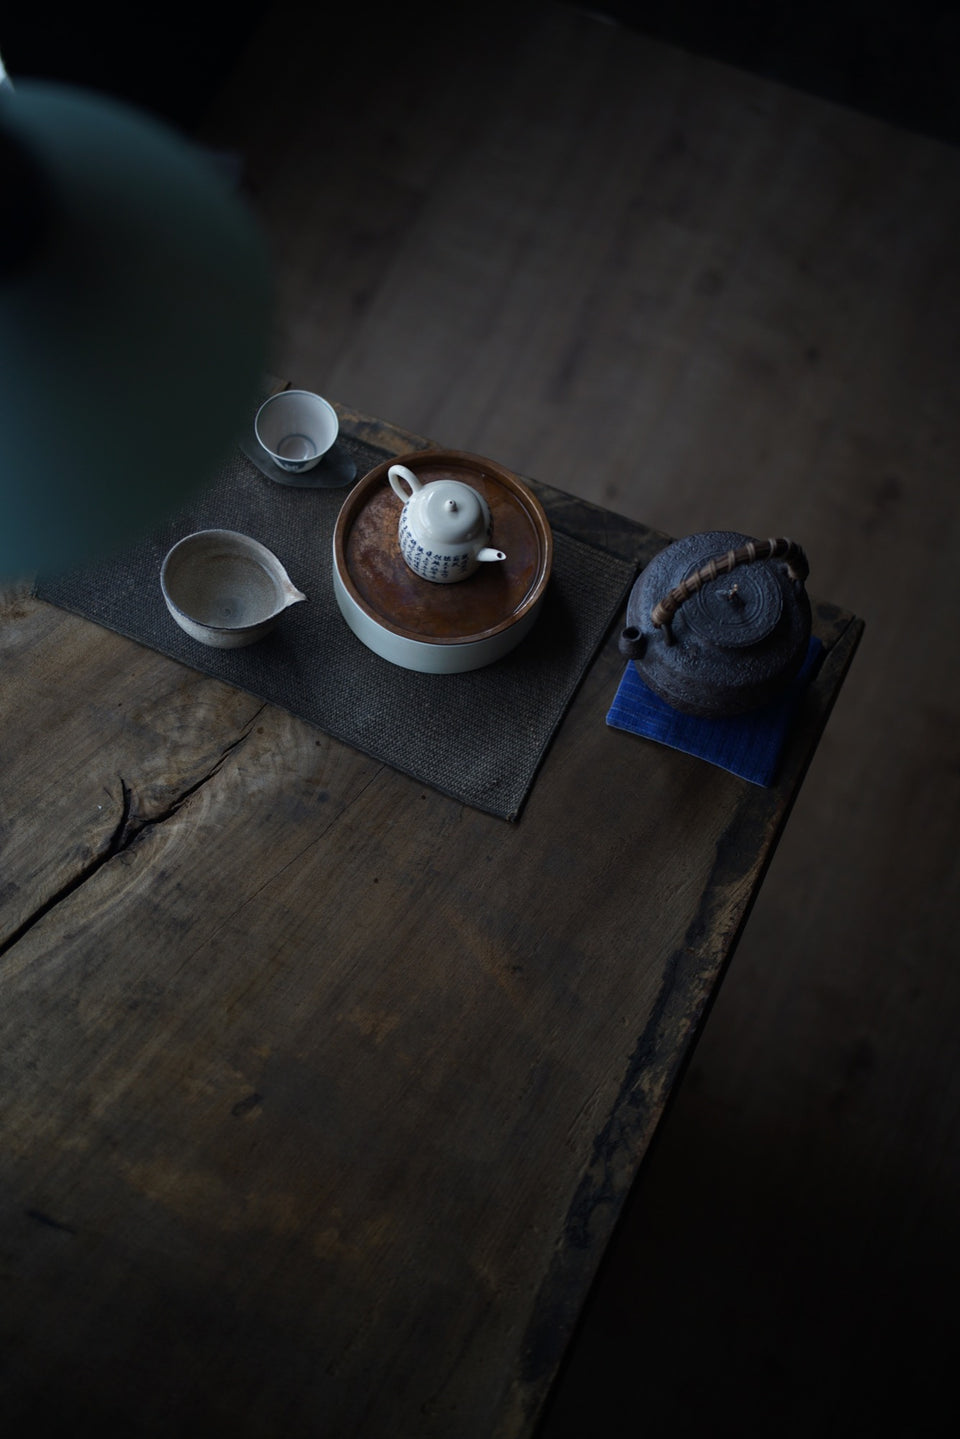 Su Shi poem teapot